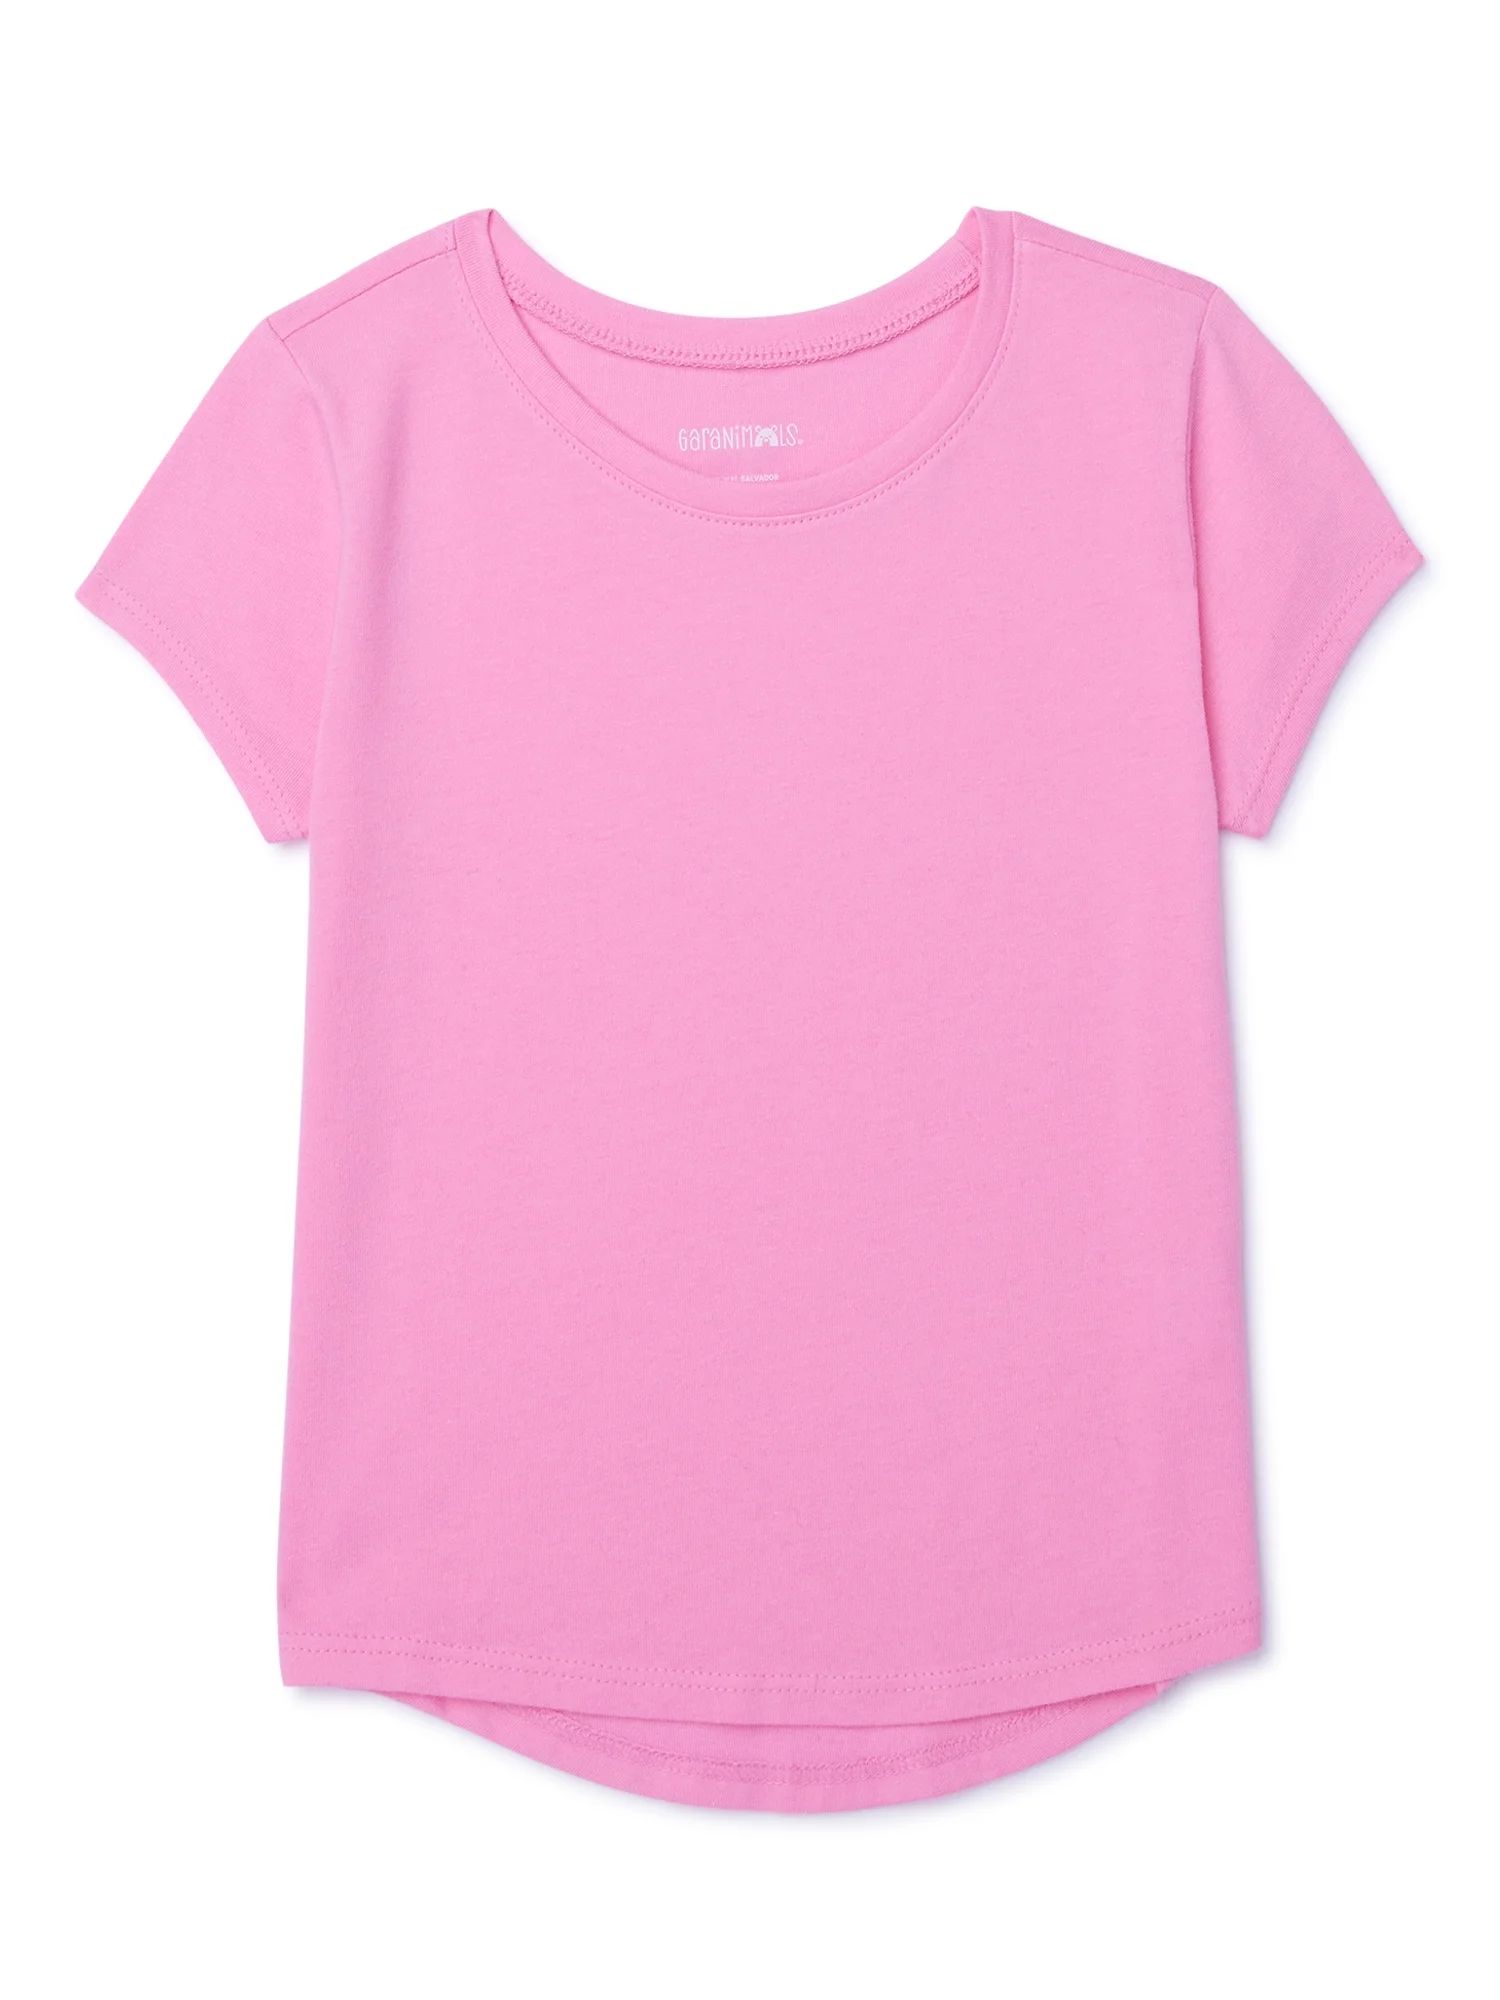 Garanimals Toddler Girl Short Sleeve Solid T-Shirt, Sizes 18M-5T | Walmart (US)